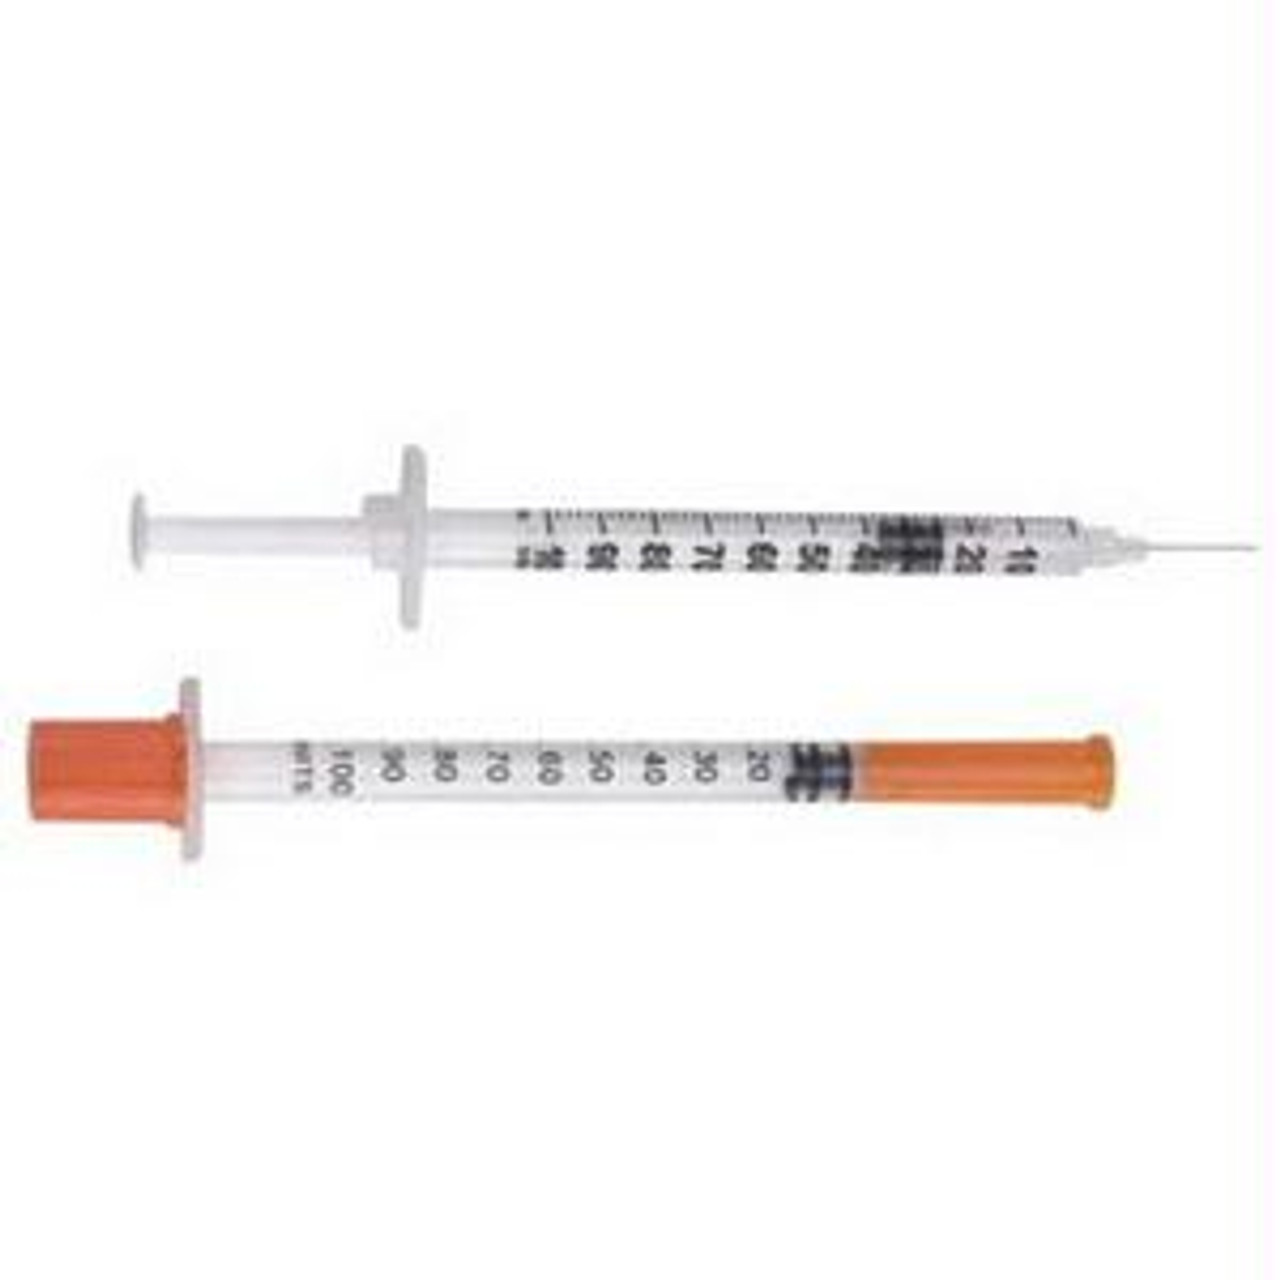 U 100 Insulin Syringe With Micro Fine Iv Needle 28g X 1 2 1 Ml 100 Count